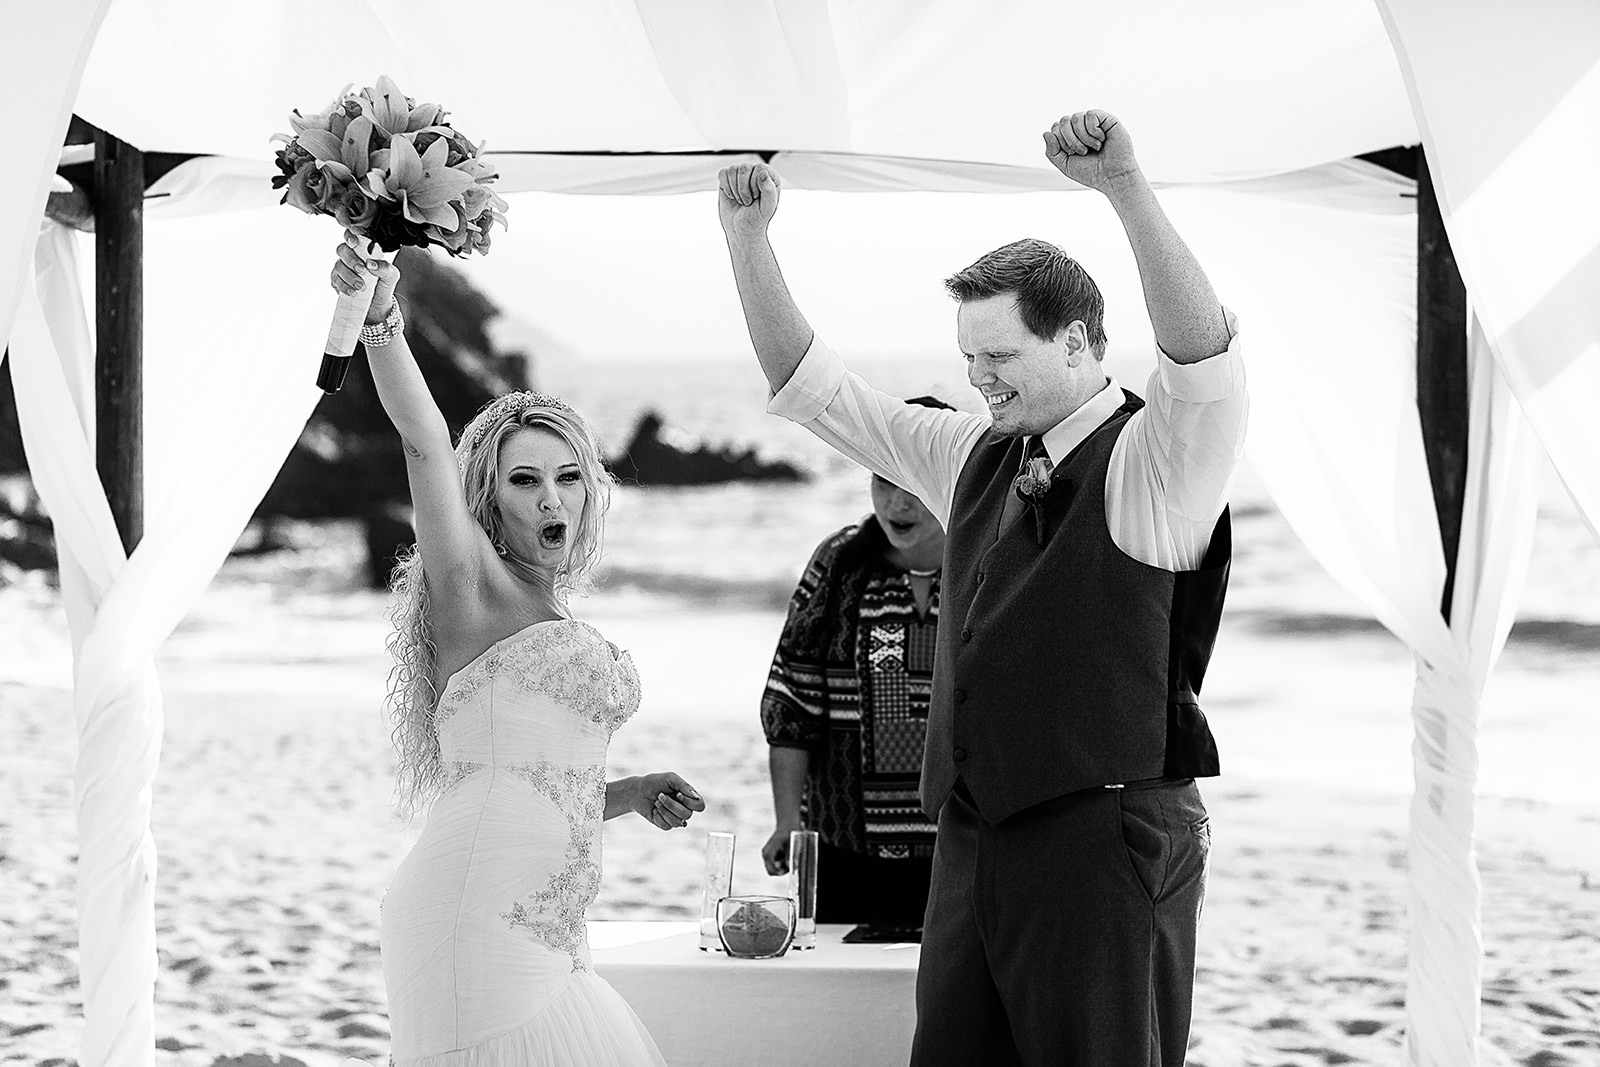 Wedding couple celebrates at ceremony on beach, black and white moment